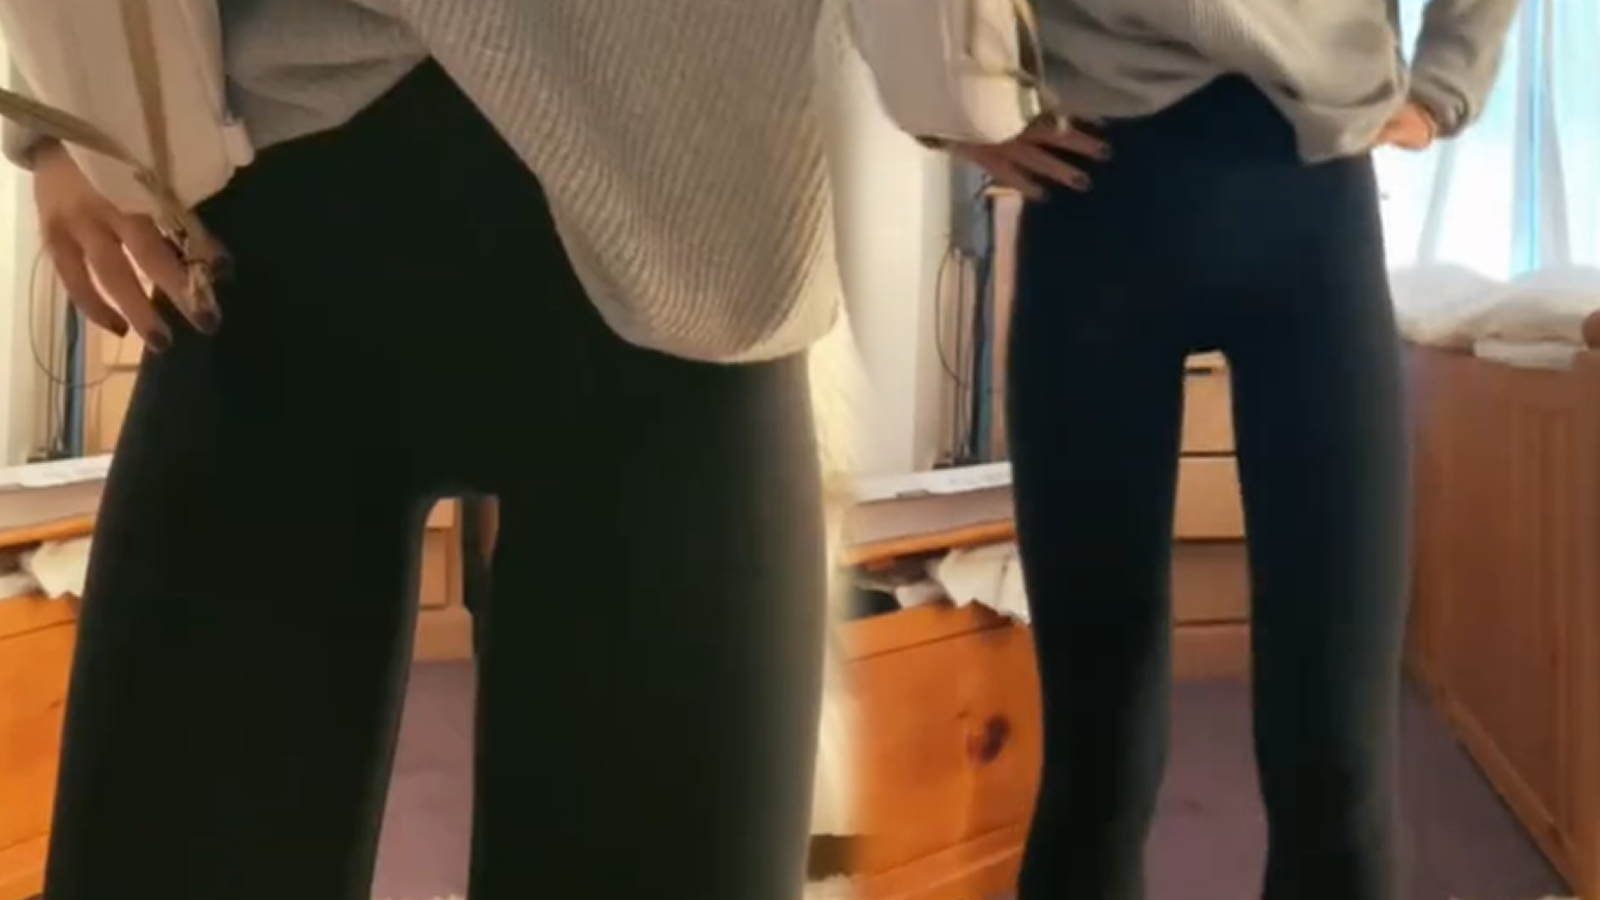 TikTok bans 'legging legs' trend over body image concerns - Dexerto